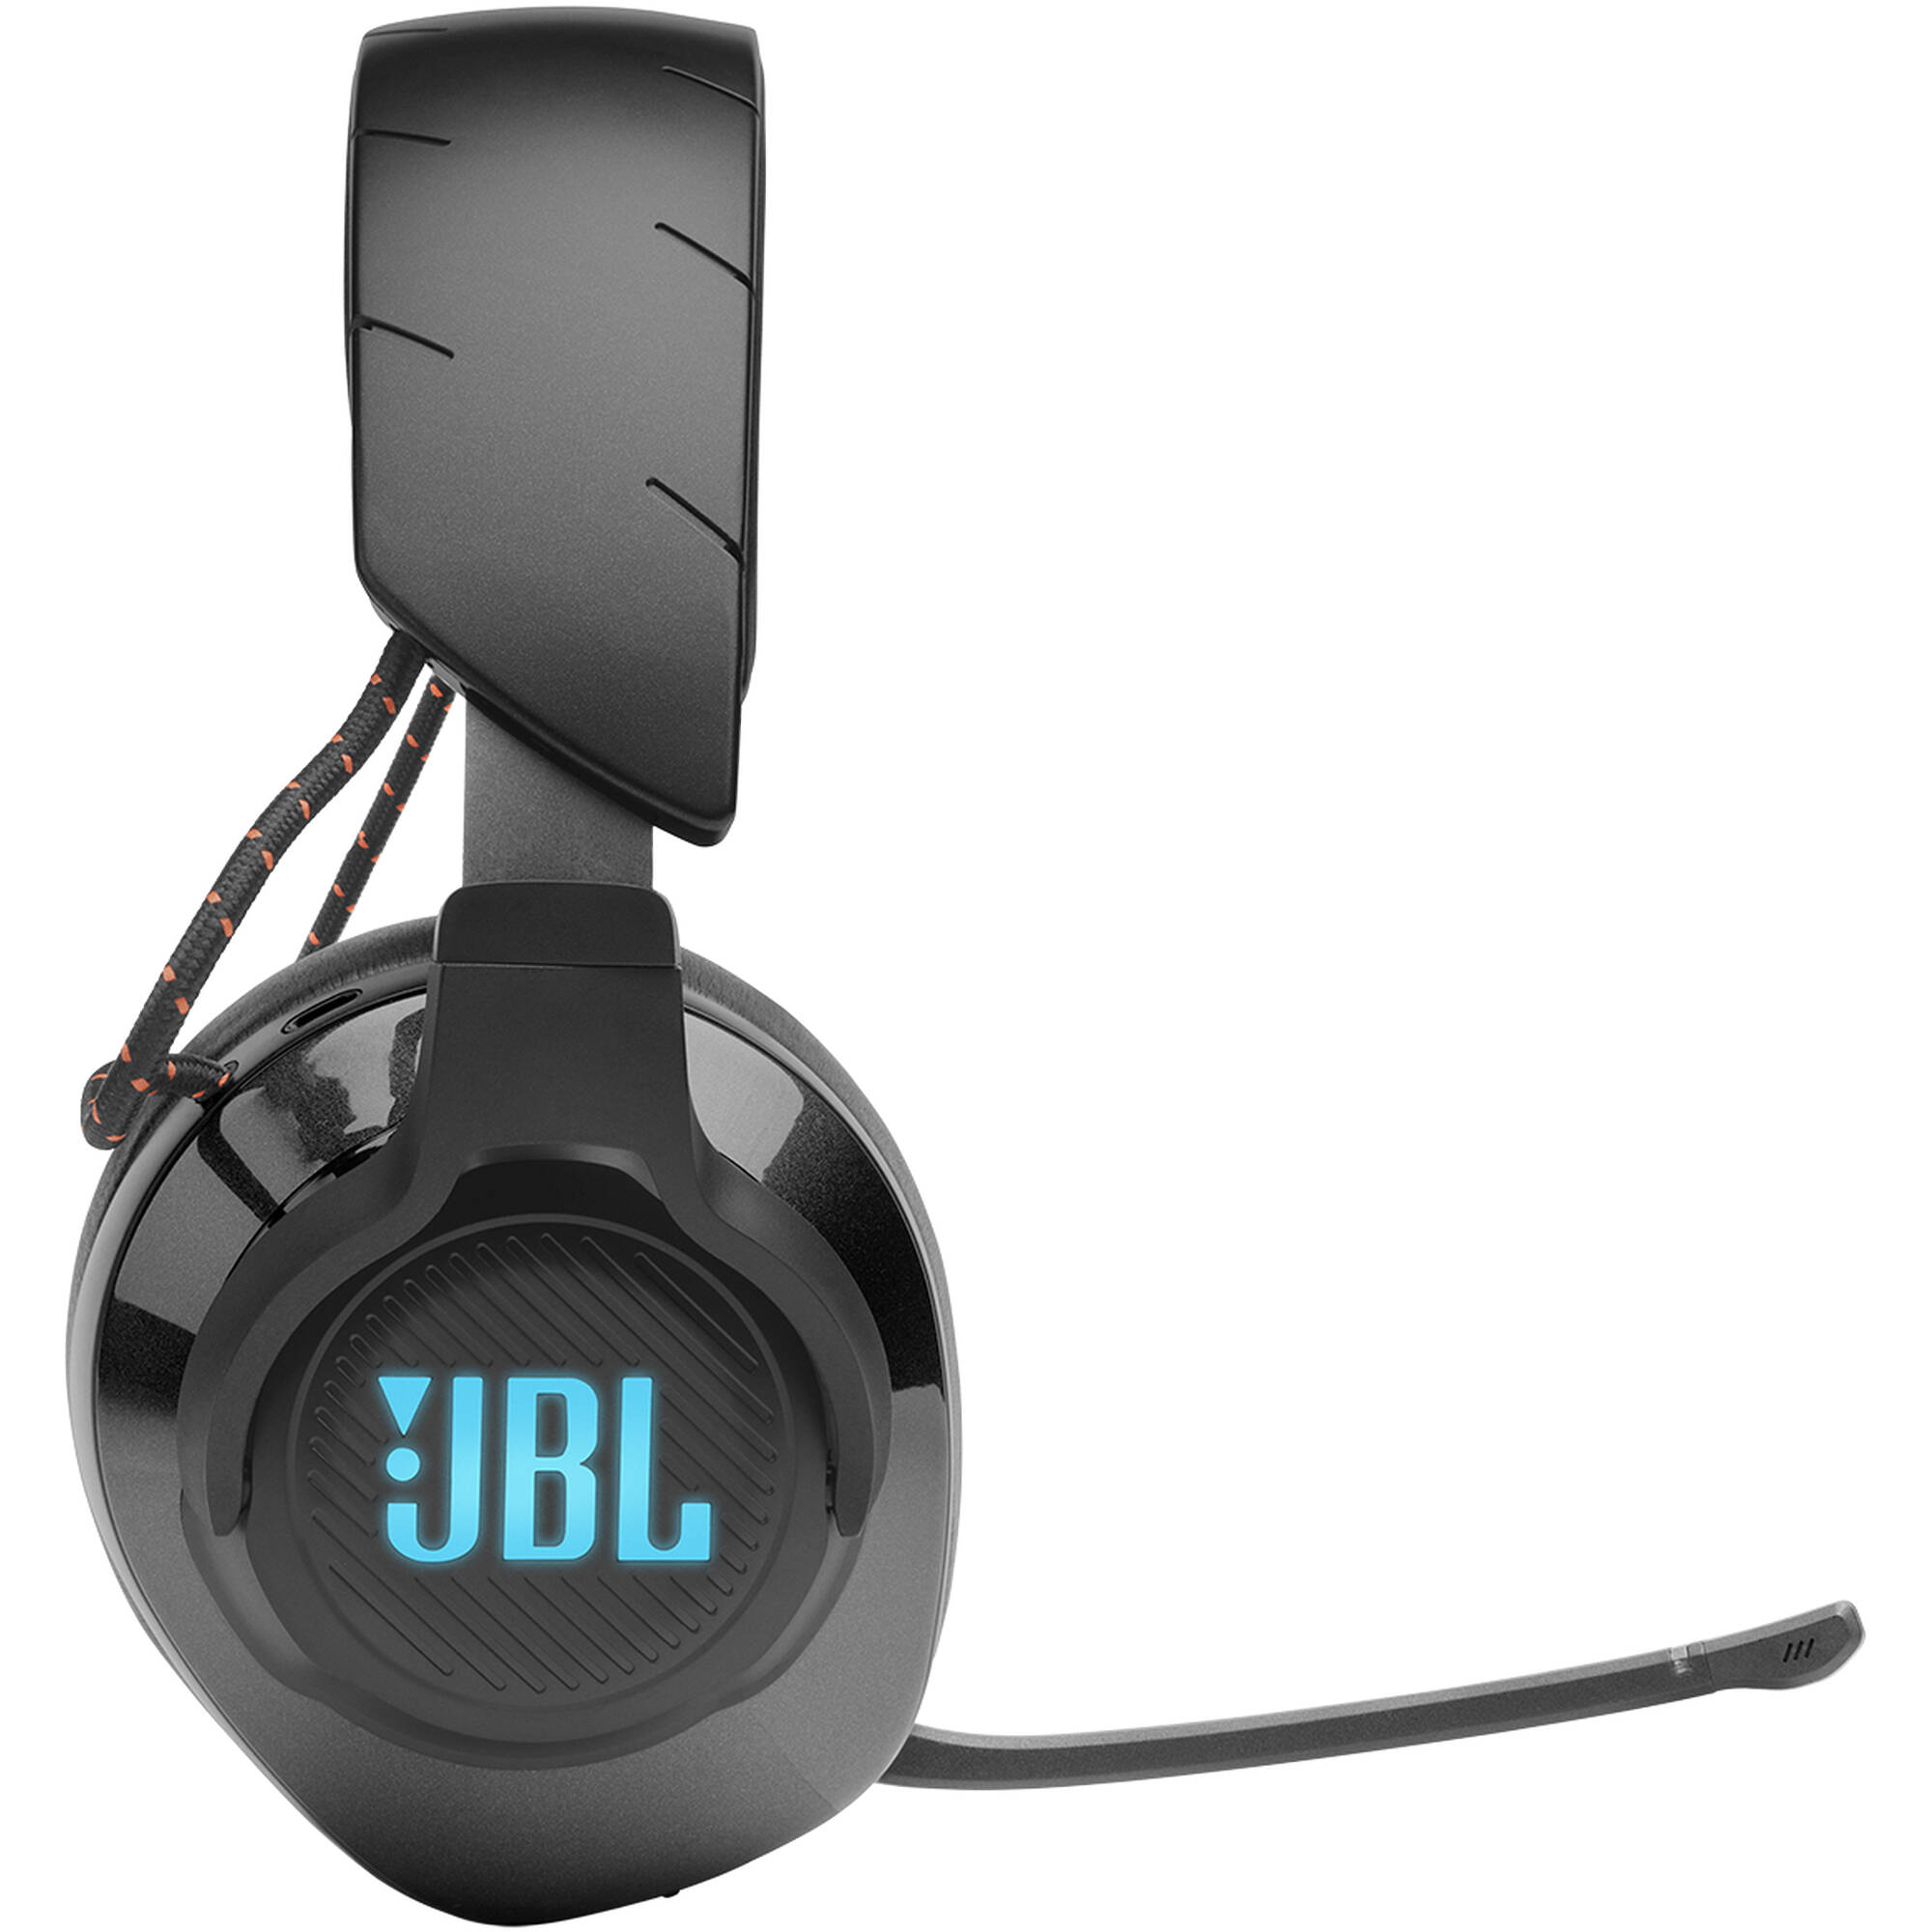 JBL JBLQUANTUM610BLKAM-Z Wireless Gaming Headset - Certified Refurbished